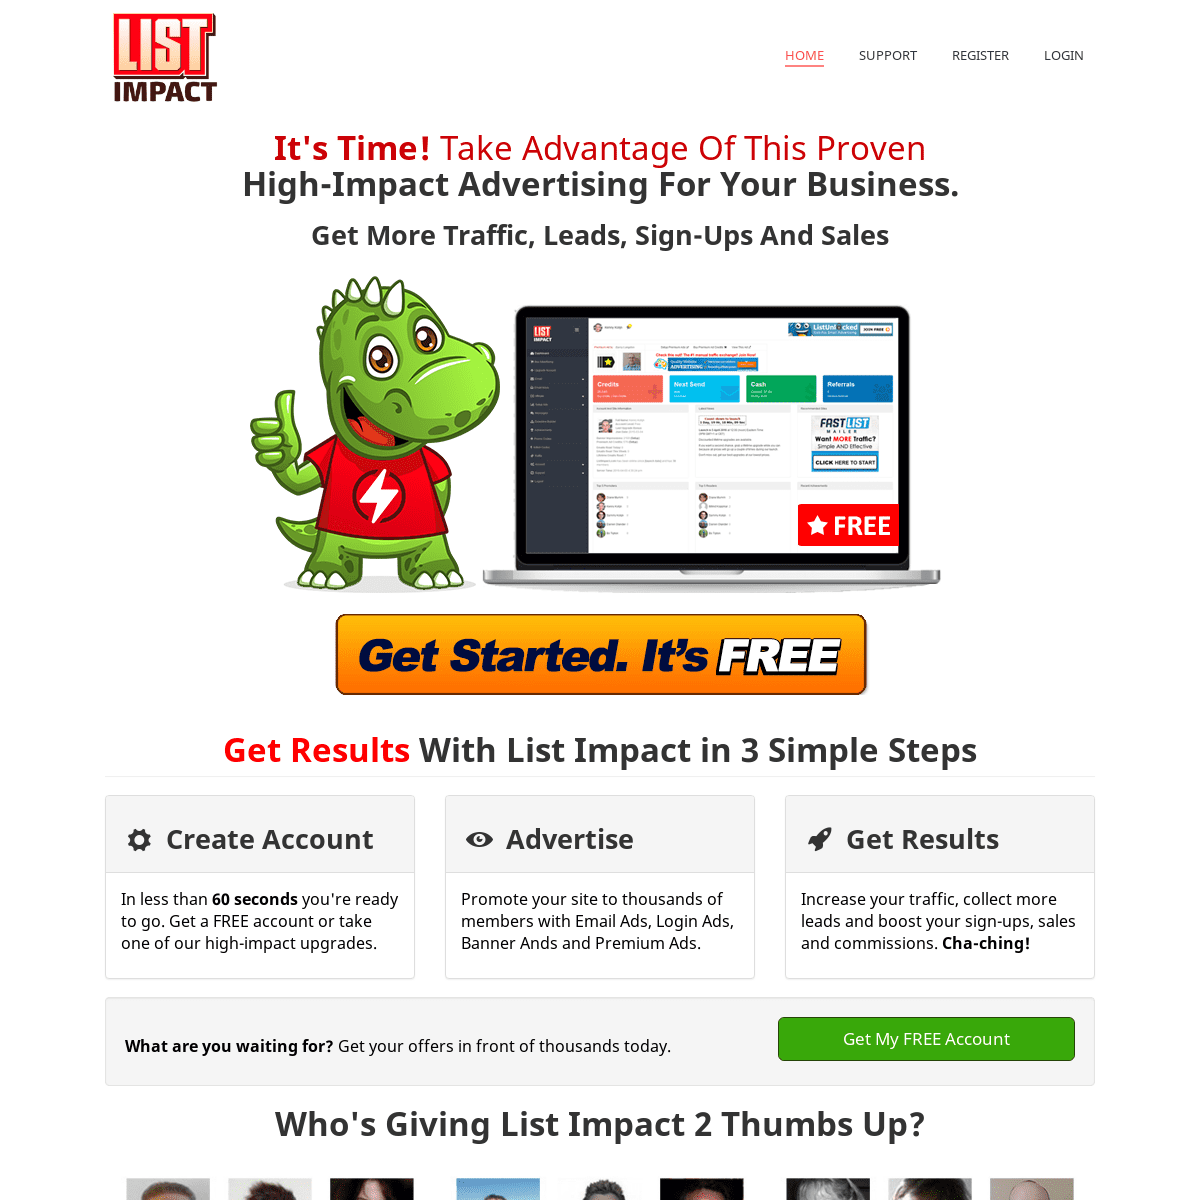 A complete backup of listimpact.com